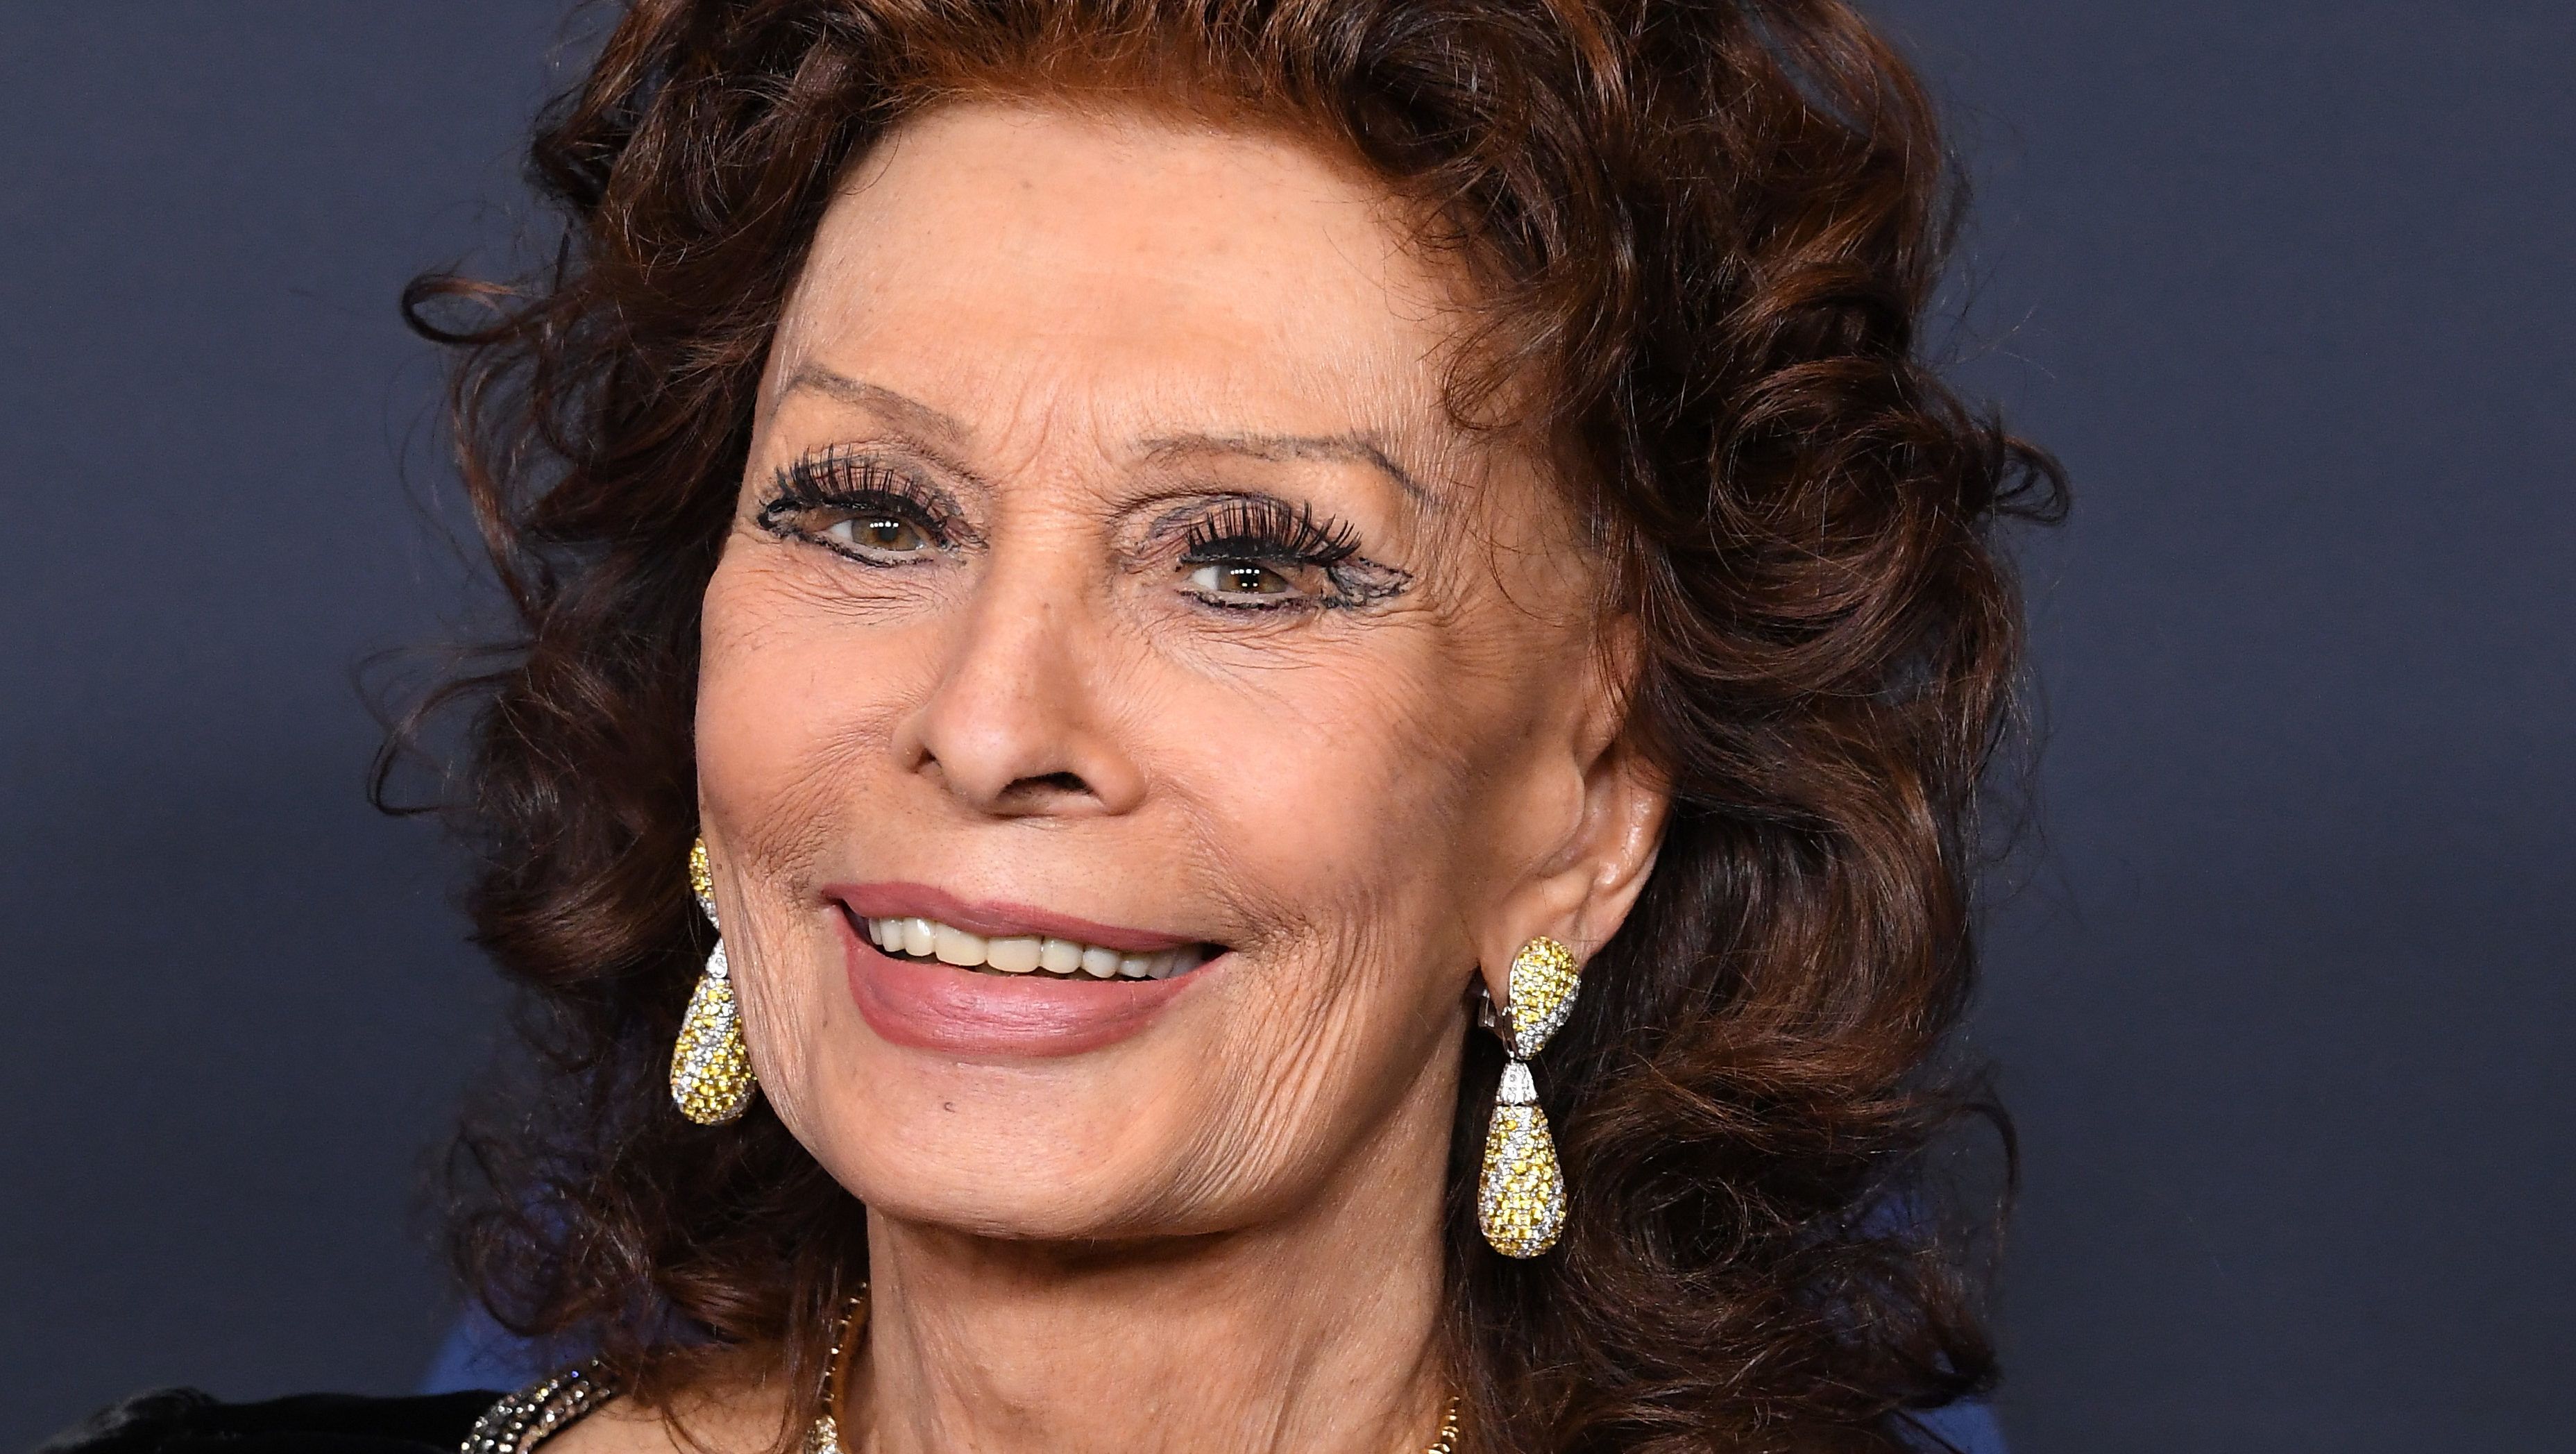 Sophia Lorent a nyolcéves unokája sminkelte?